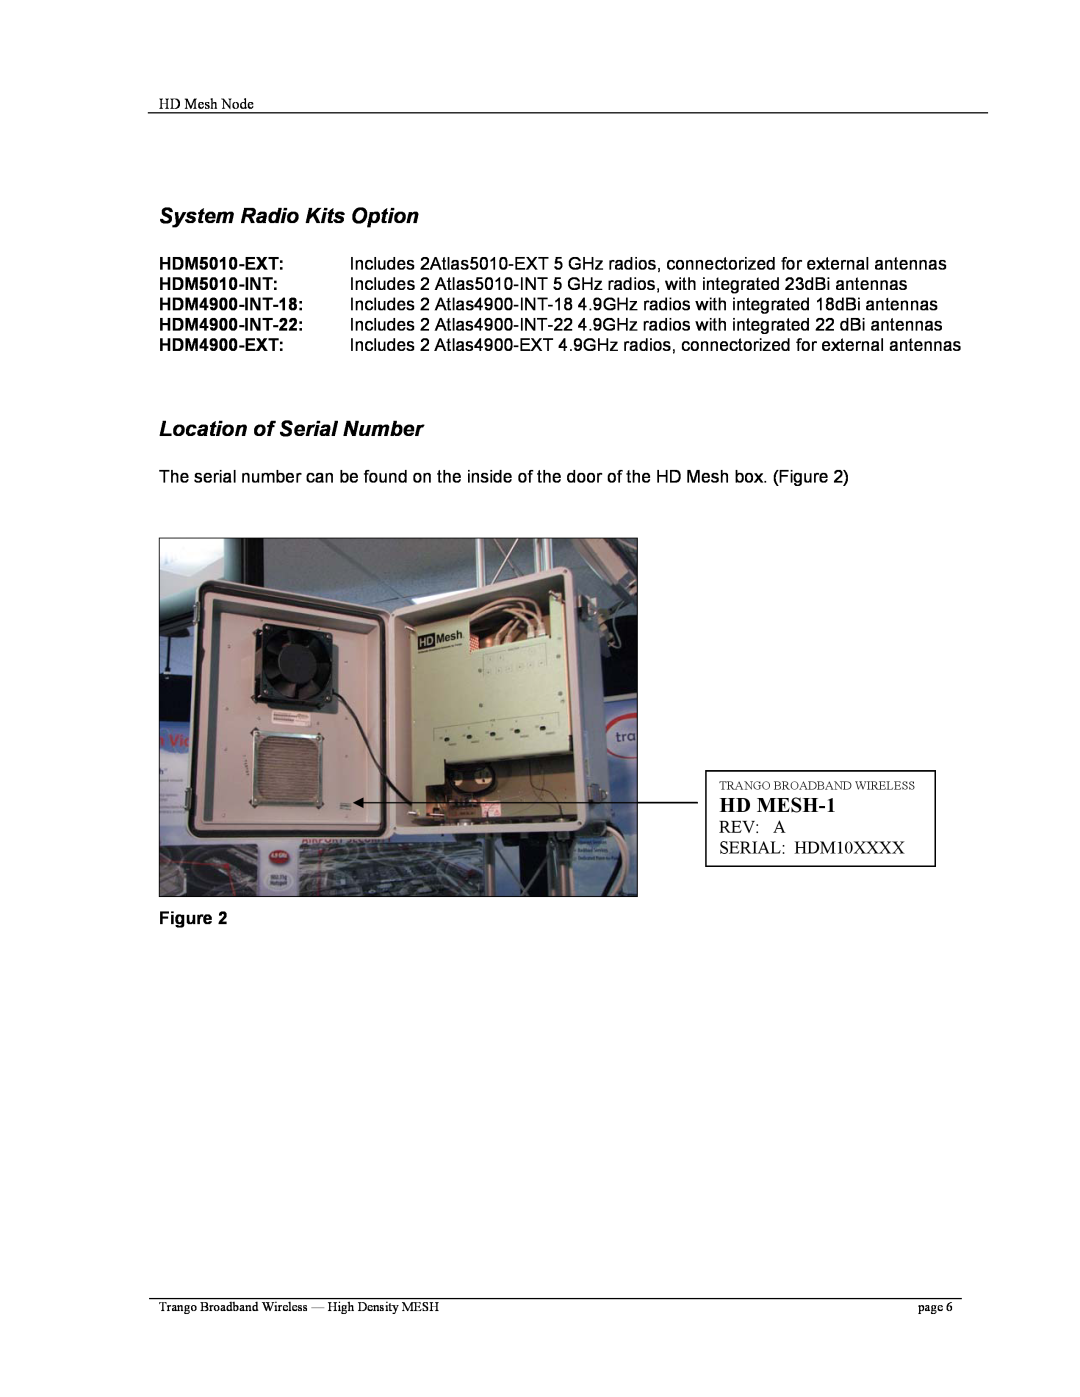 Trango Broadband High Density Mesh System user manual System Radio Kits Option, Location of Serial Number, HD MESH-1 